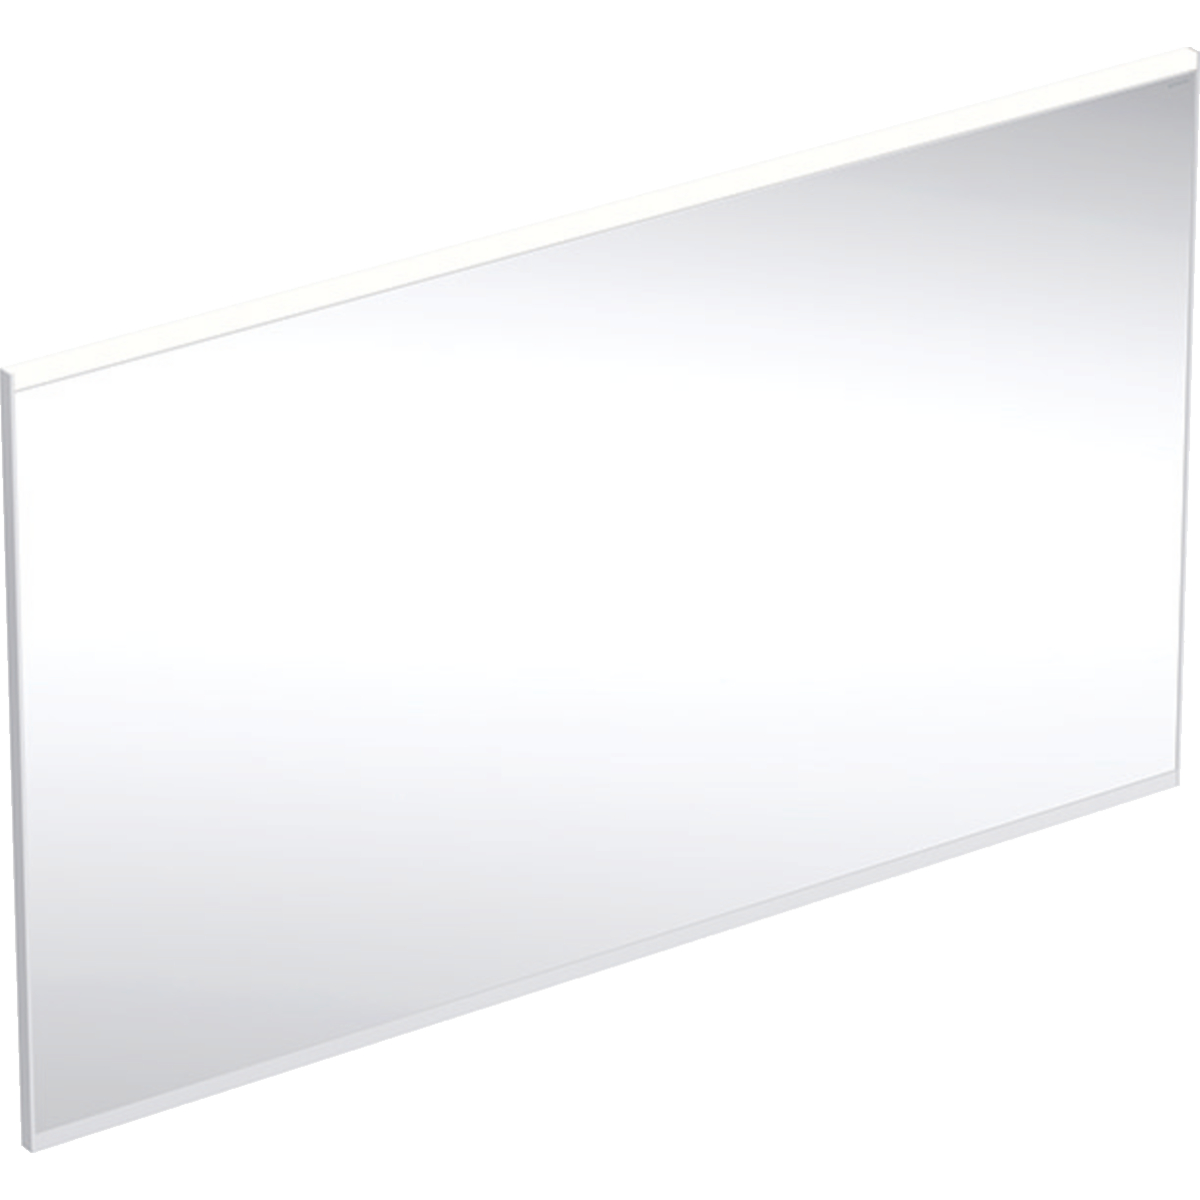 Option Plus Square illuminated mirror with lighting - 1200mm